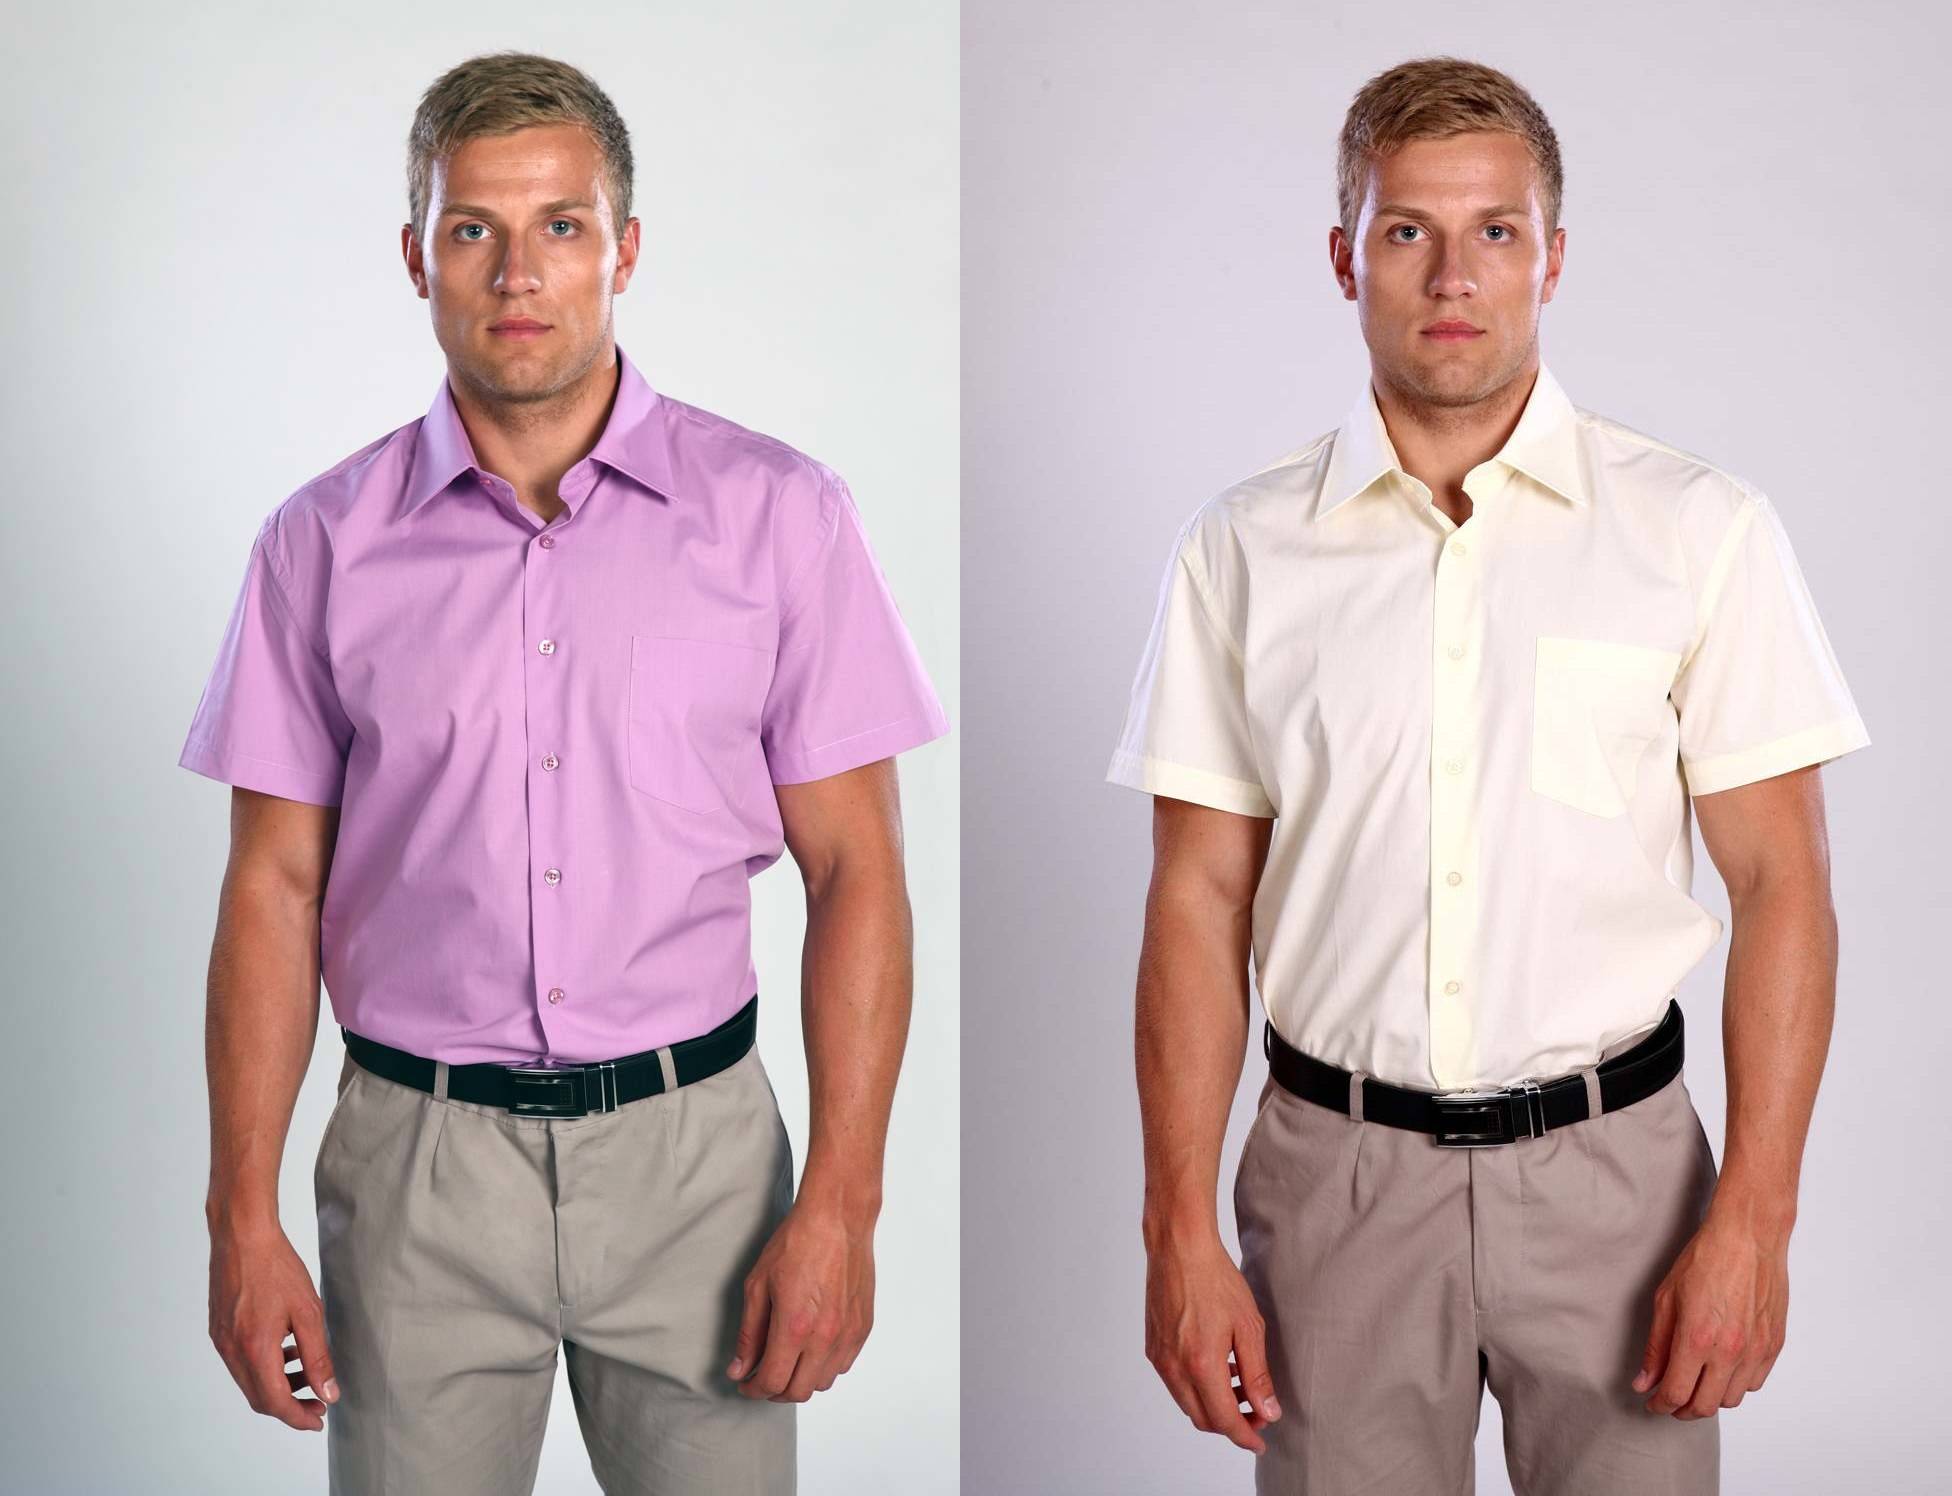 Как мужчине подобрать рубашку под цветотип внешности